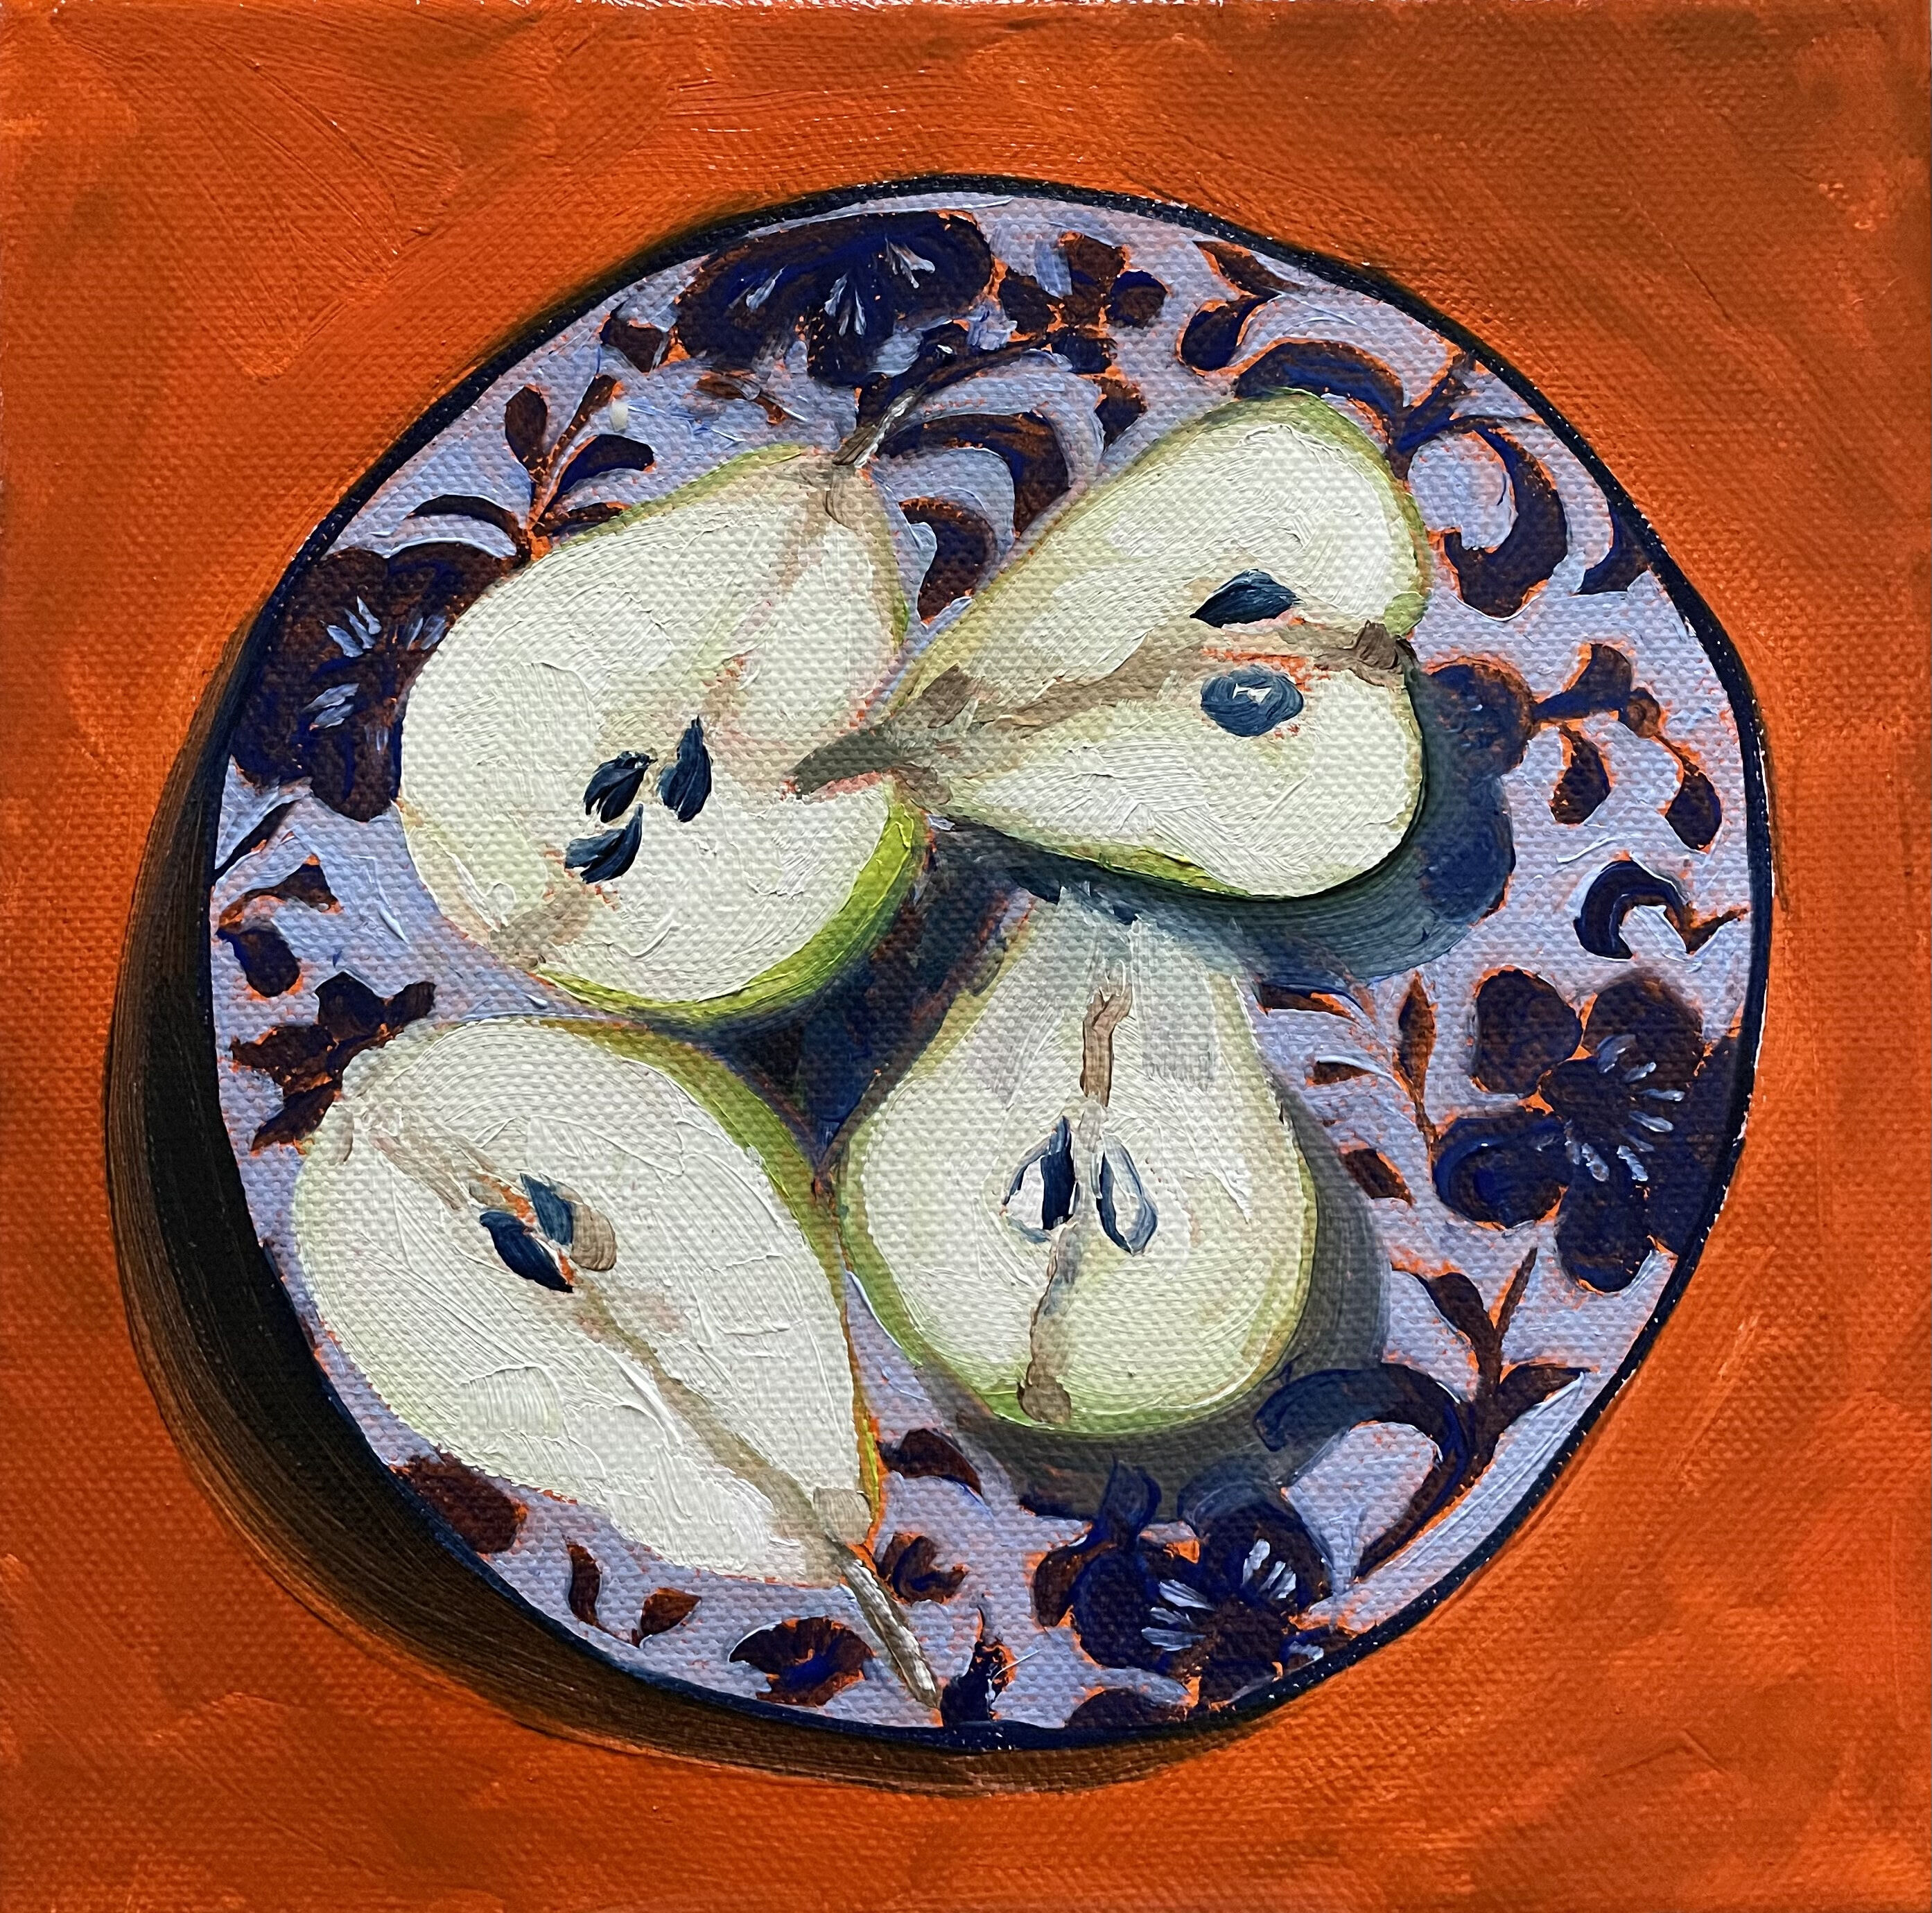 Cut pears on blue plate